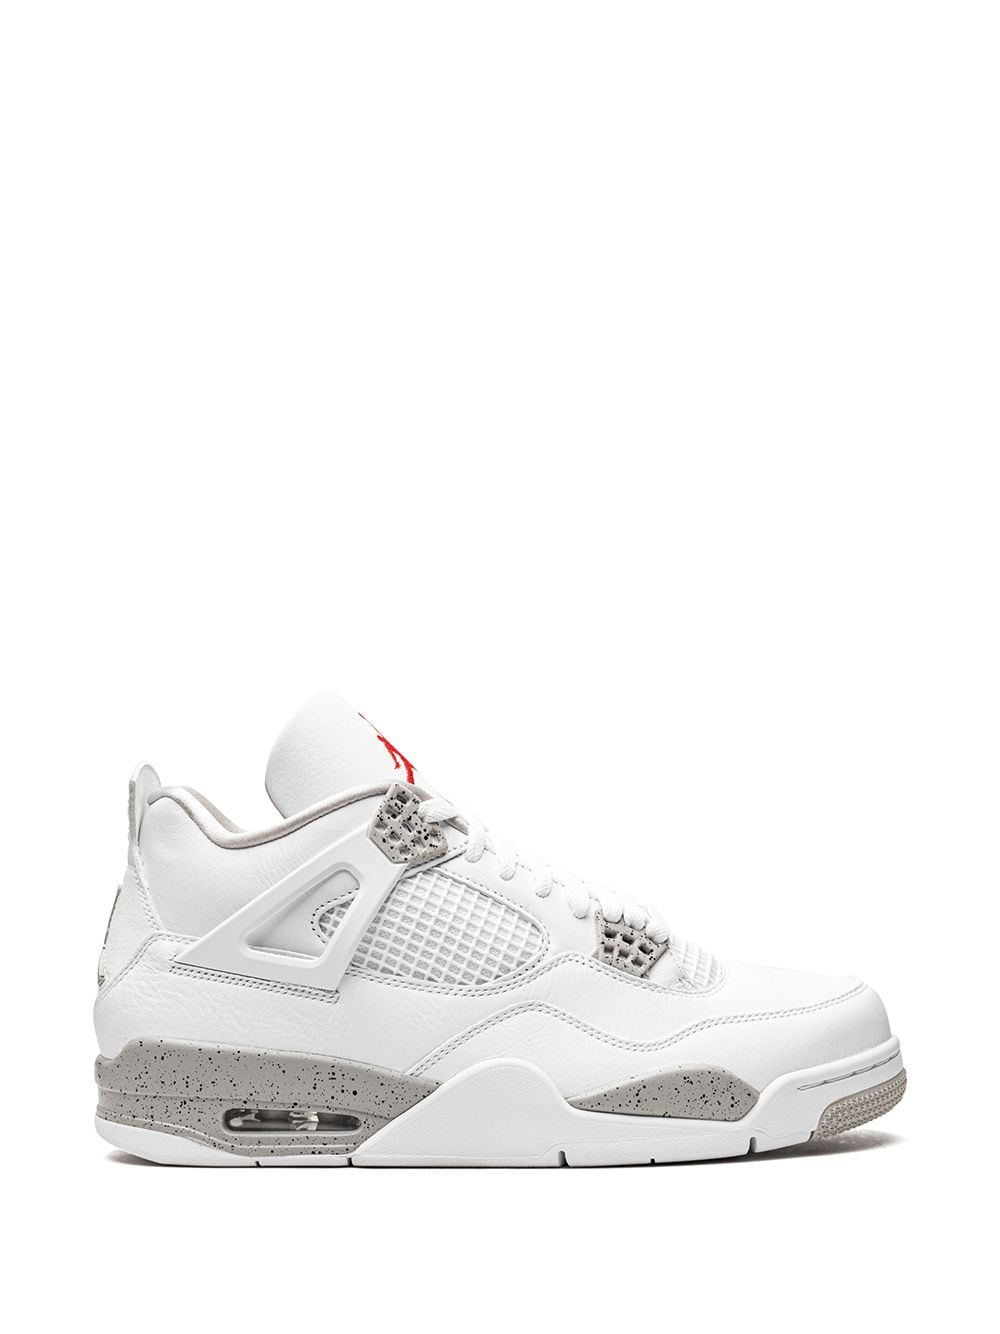 Giày Nike Air Jordan 4 White Oreo Rep 1:1